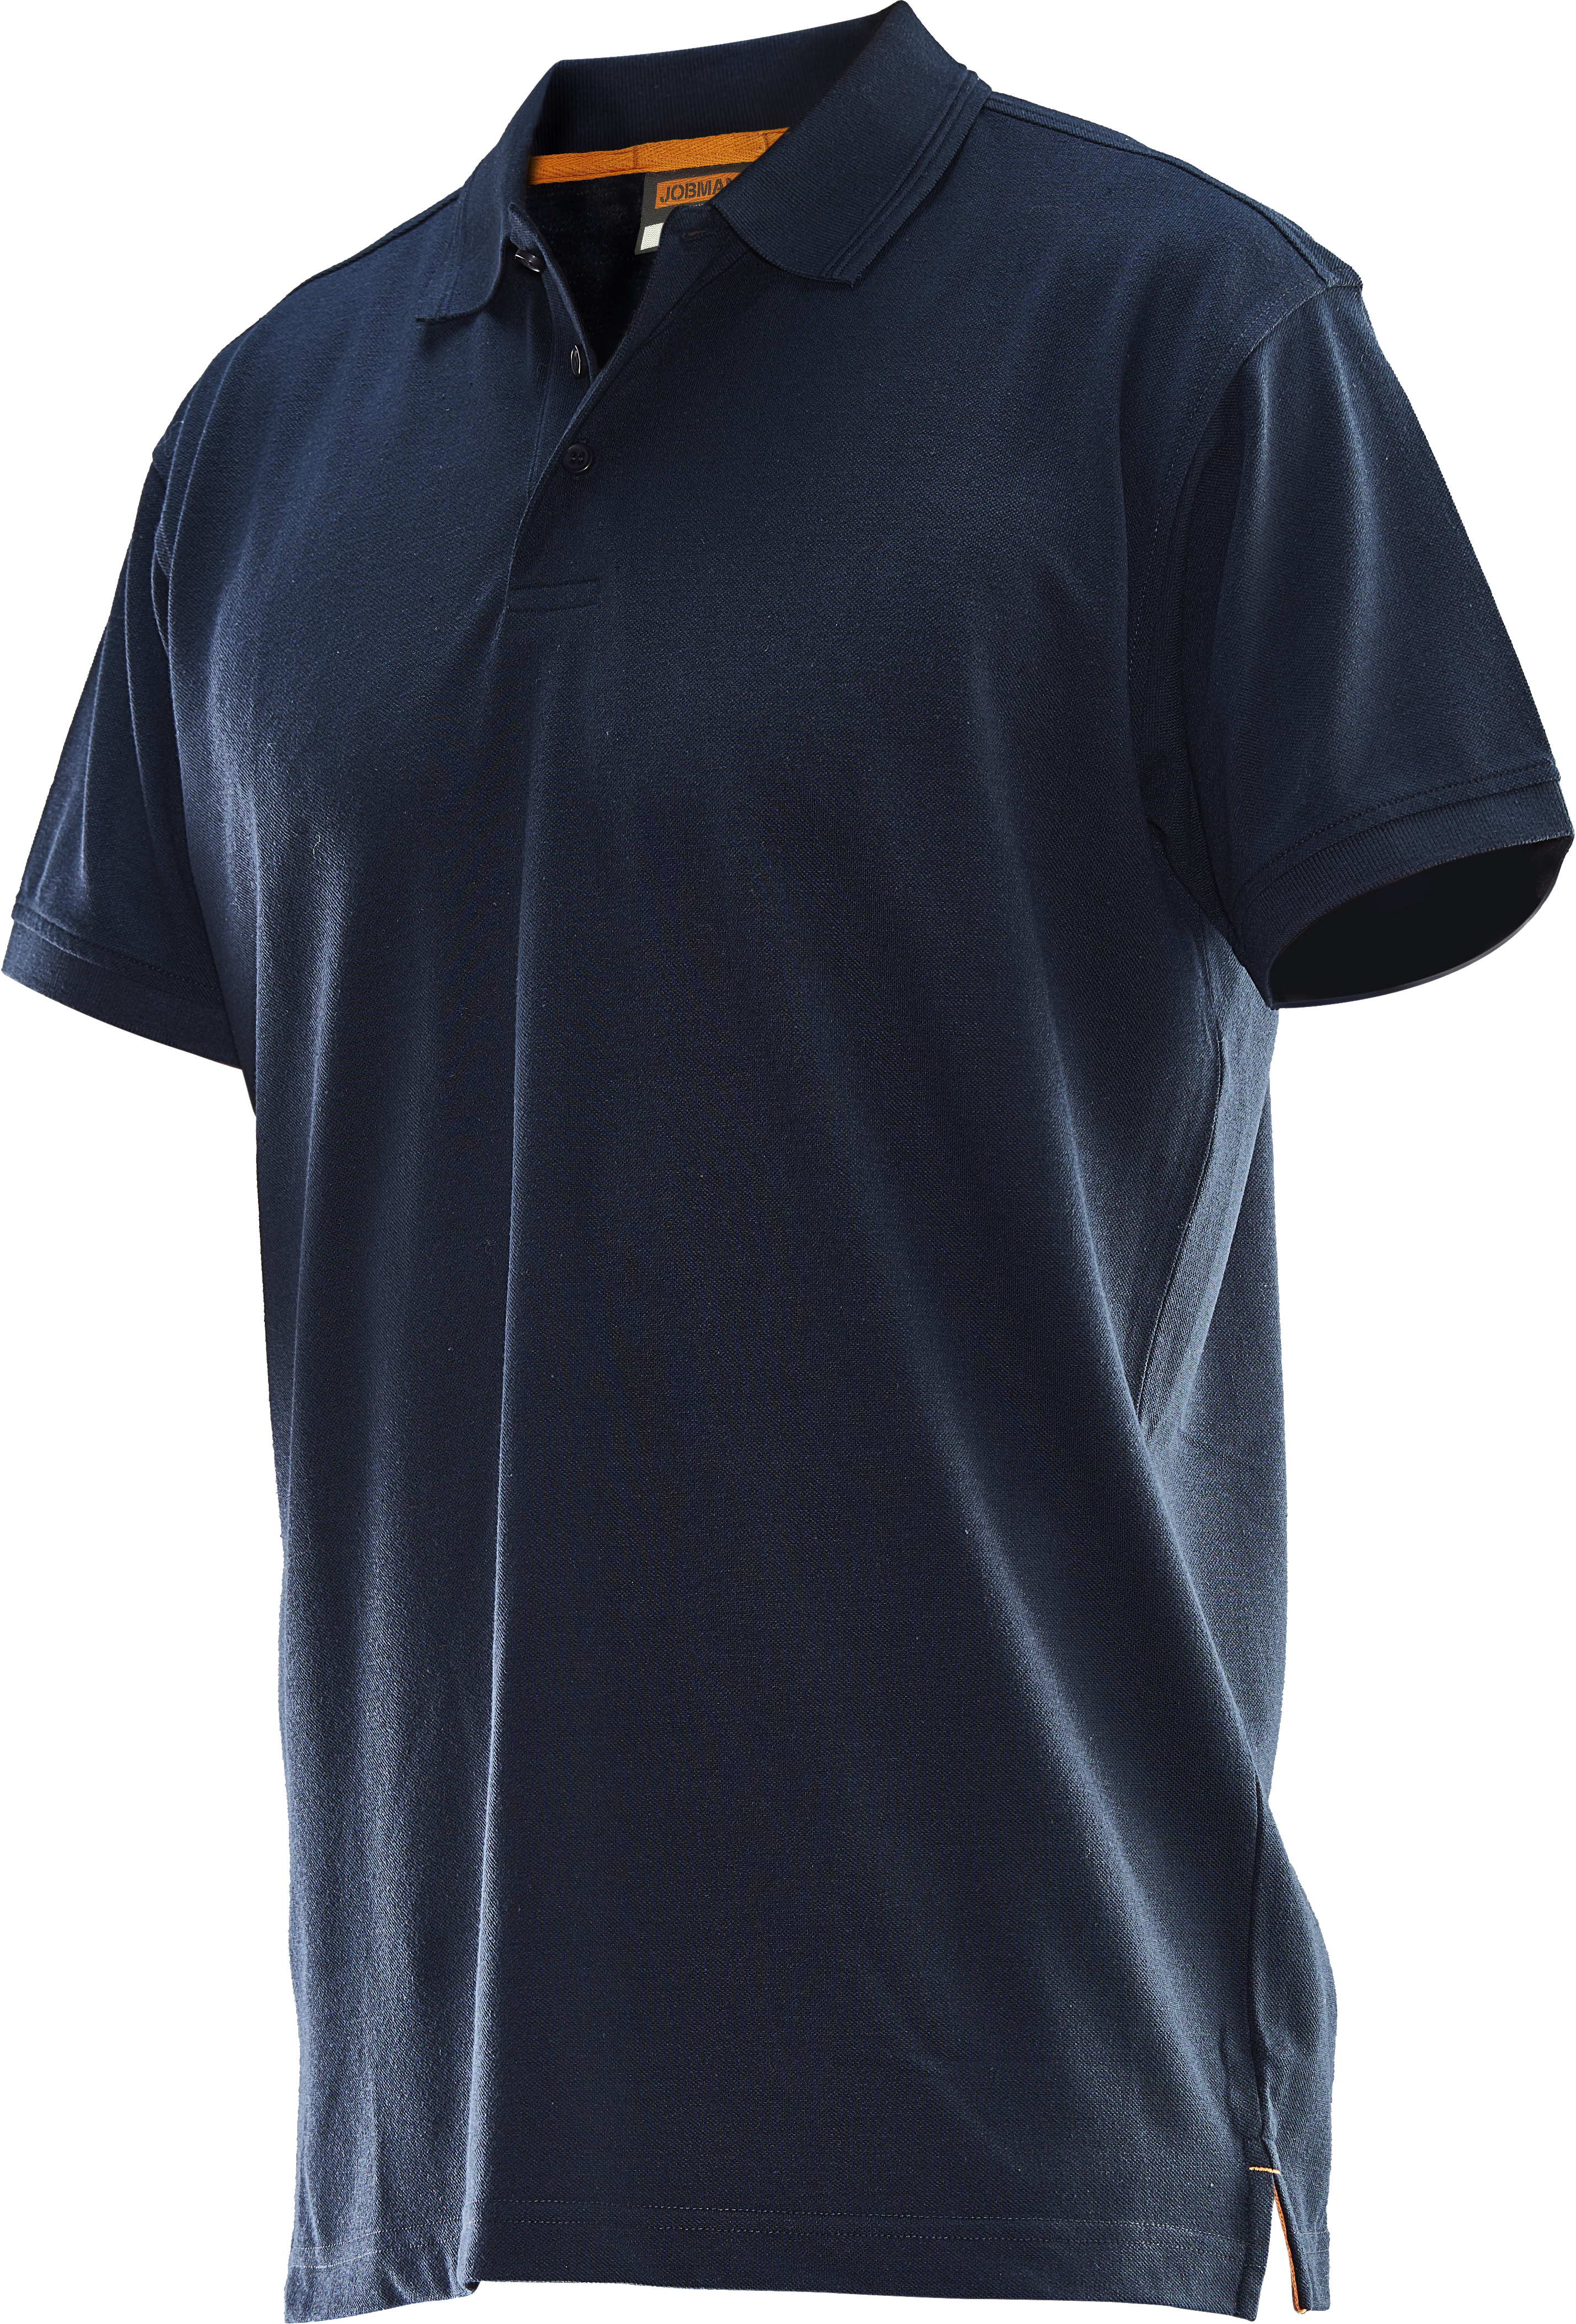 5564 T-shirt polo L bleu marine